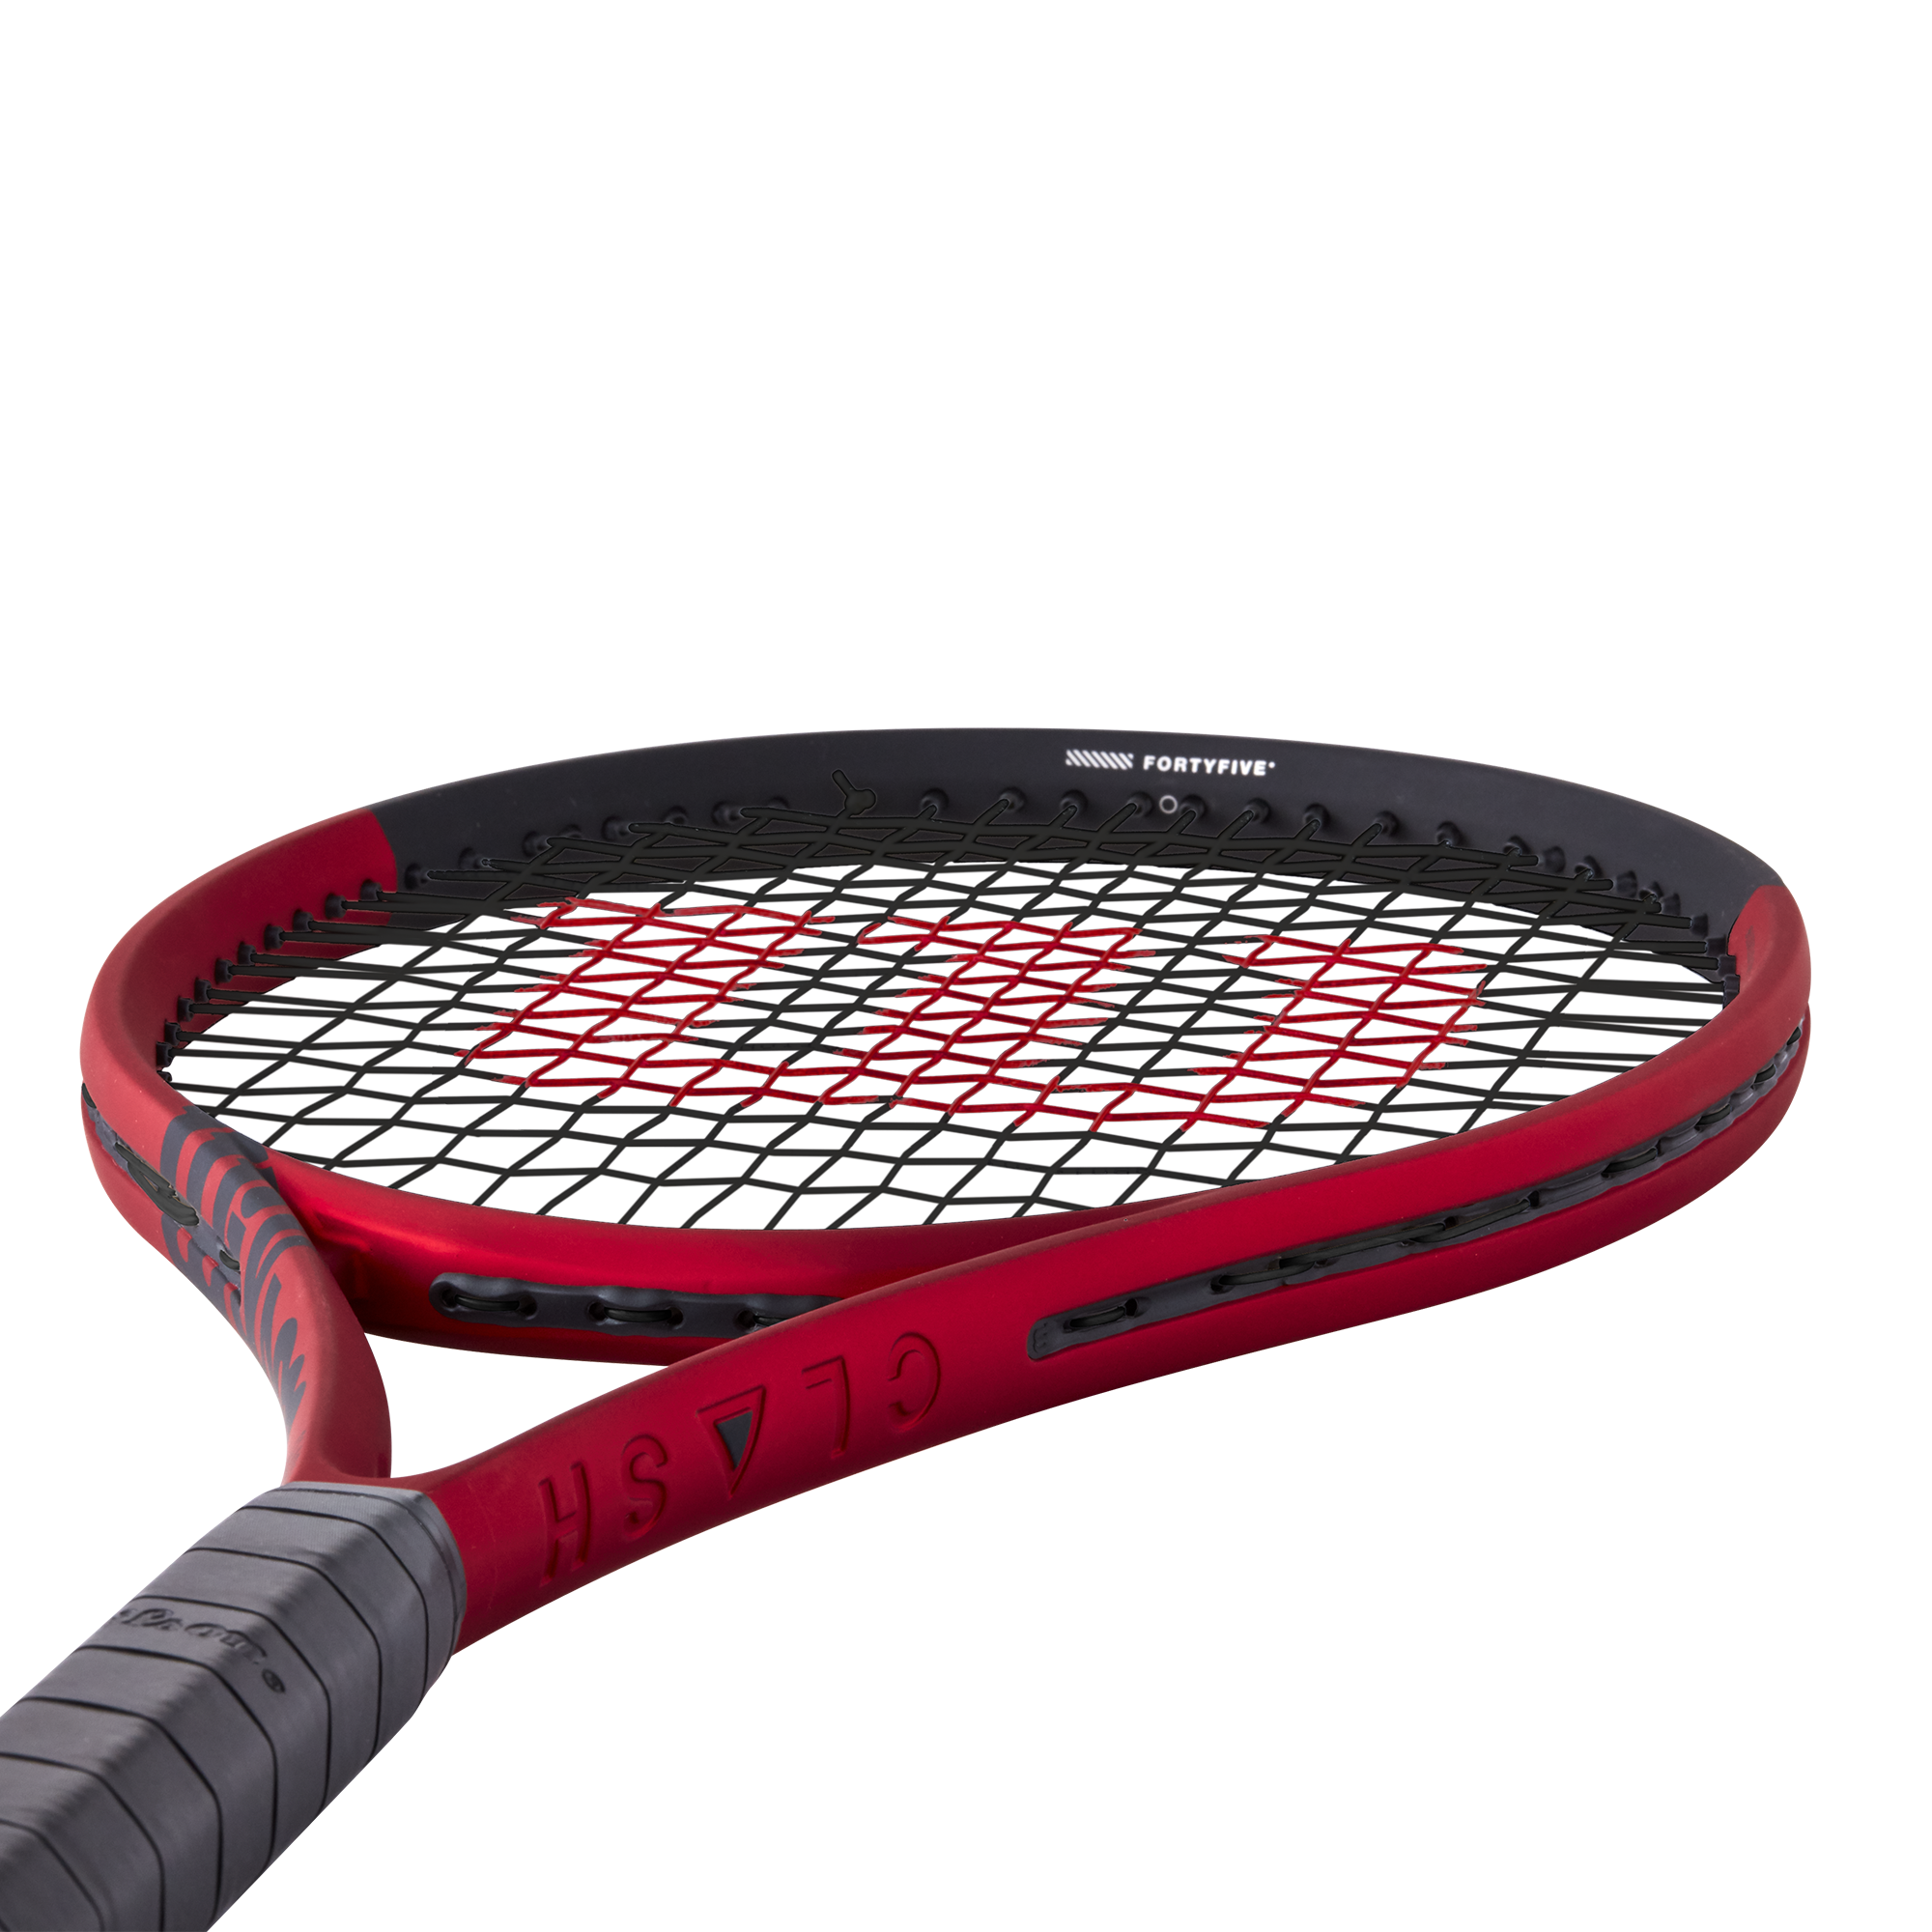 Wilson Clash 100 V2 Tennis Racket